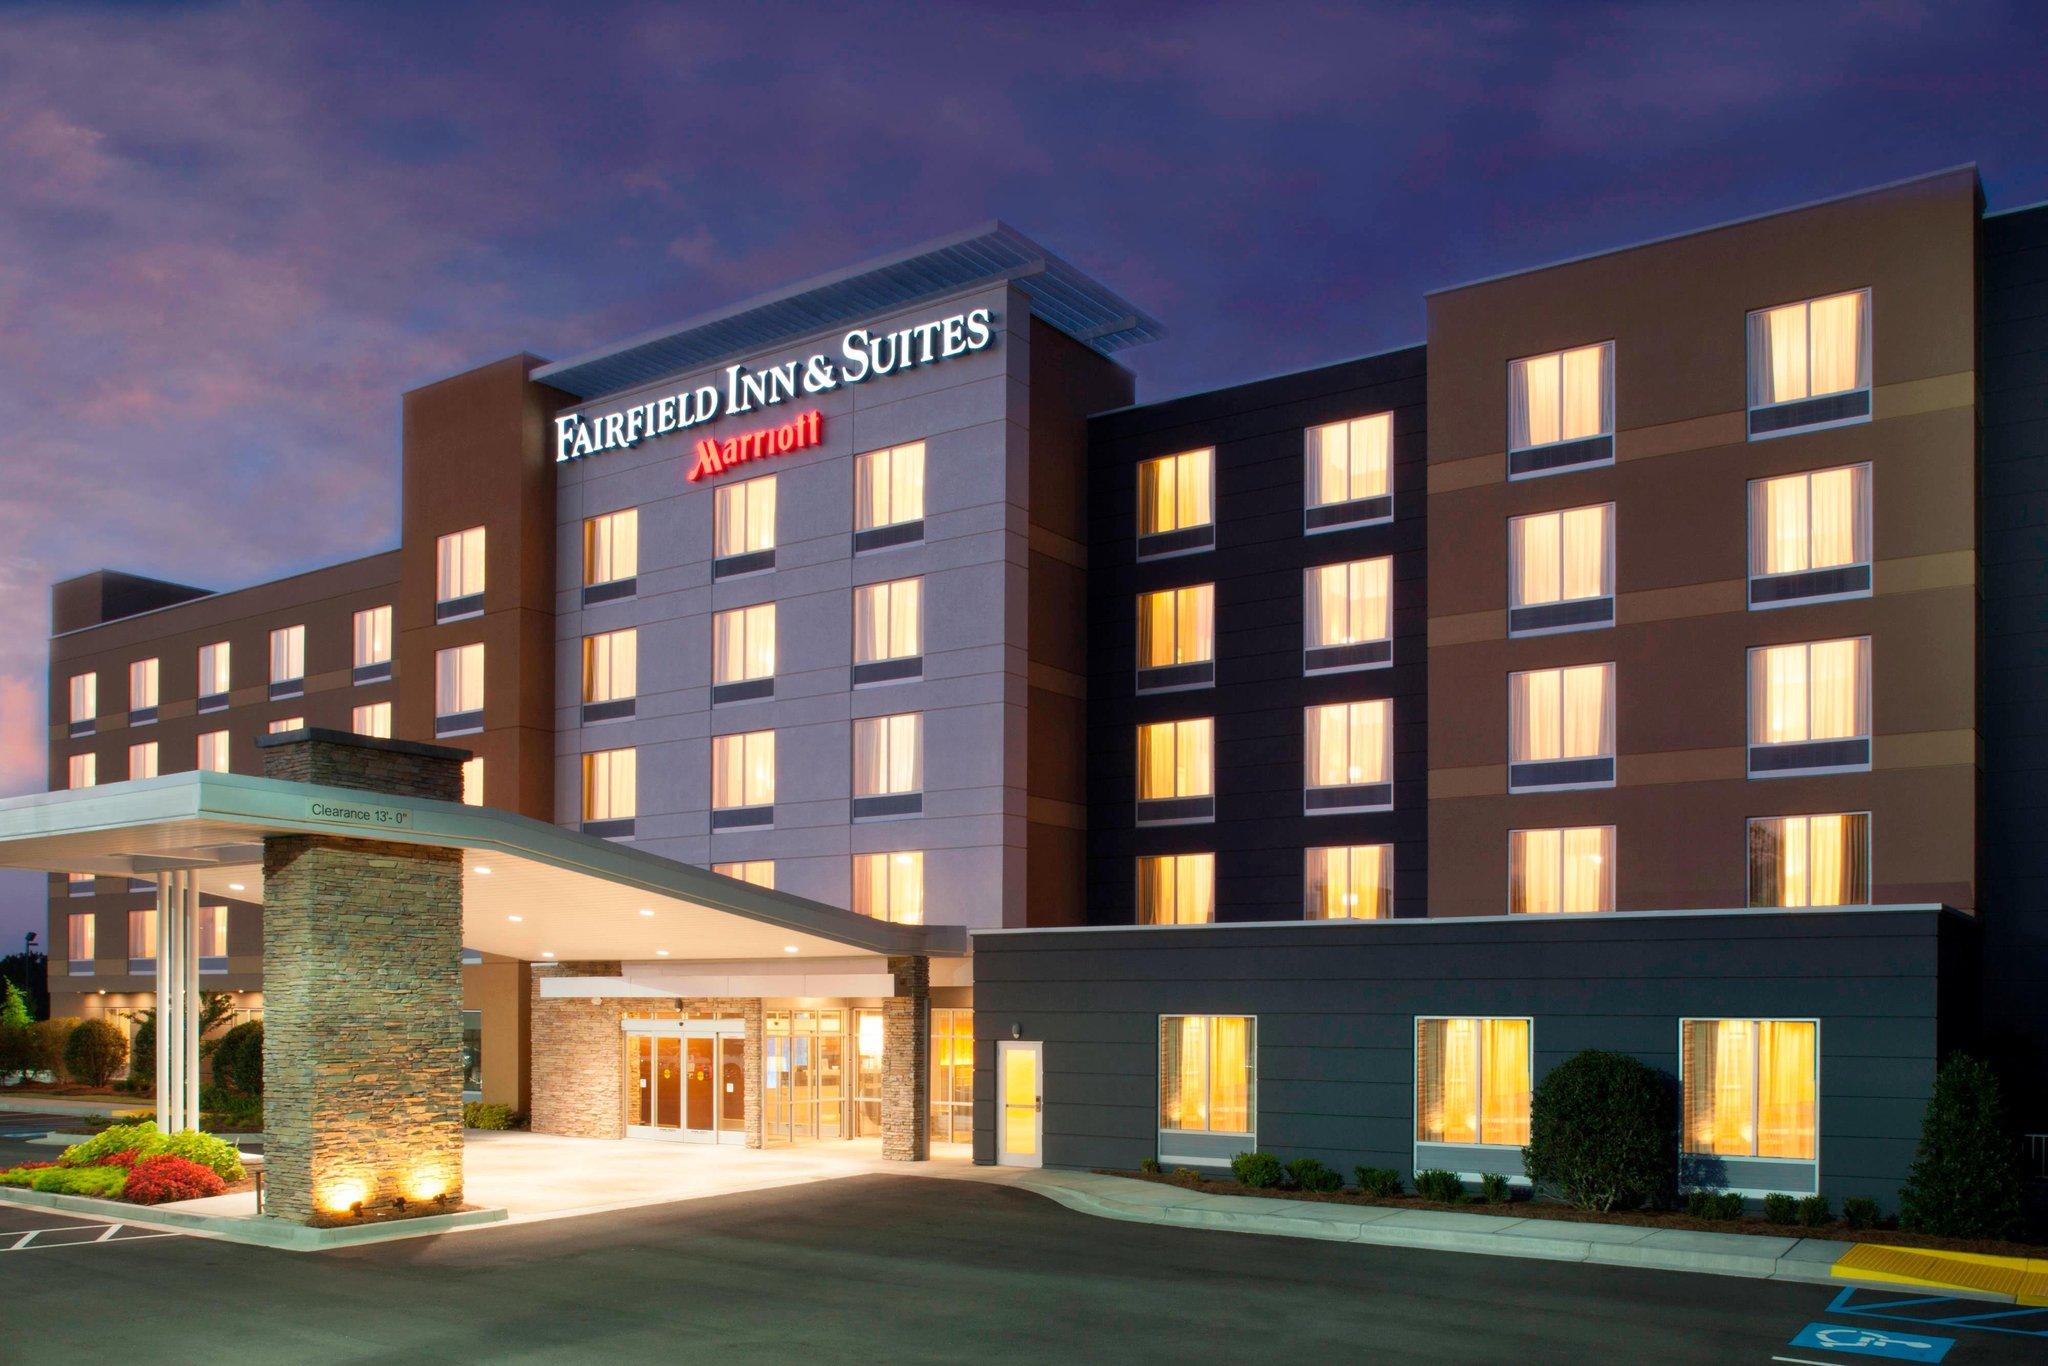 Fairfield Inn & Suites Atlanta Gwinnett Place in Duluth, GA